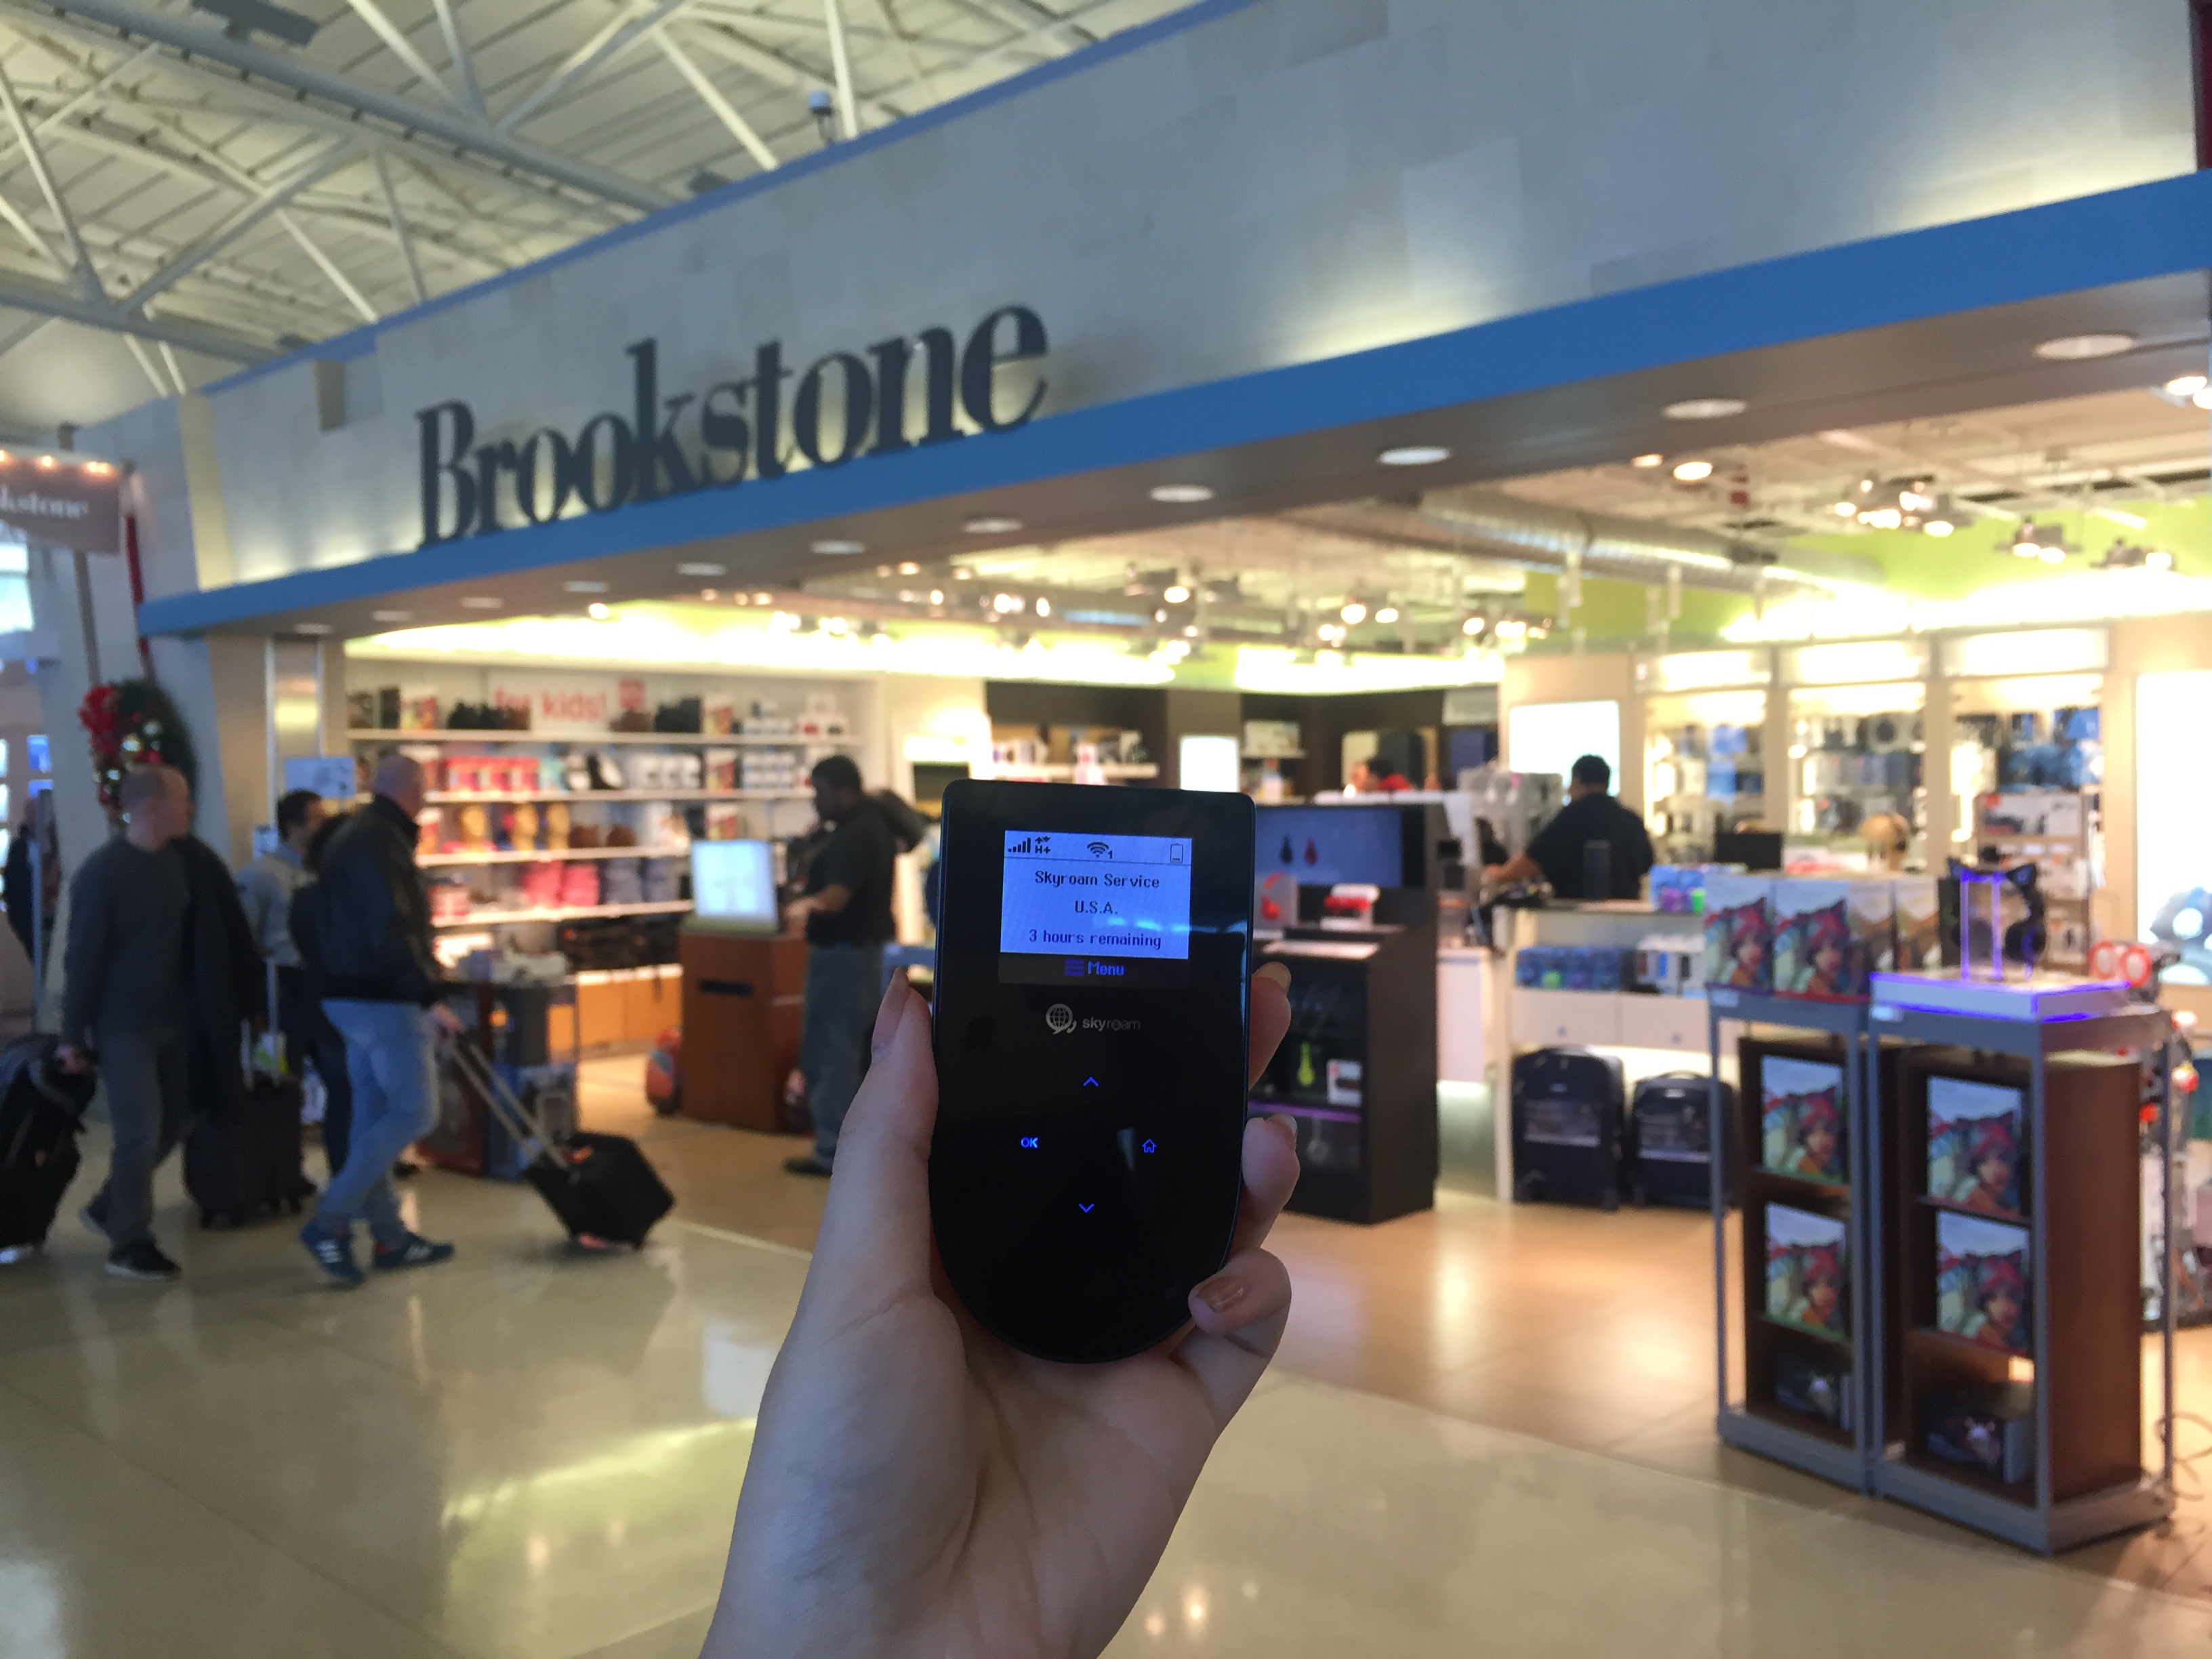 Skyroam's global hotspot at Brookstone's Gift Store in JFK International Airport in NY